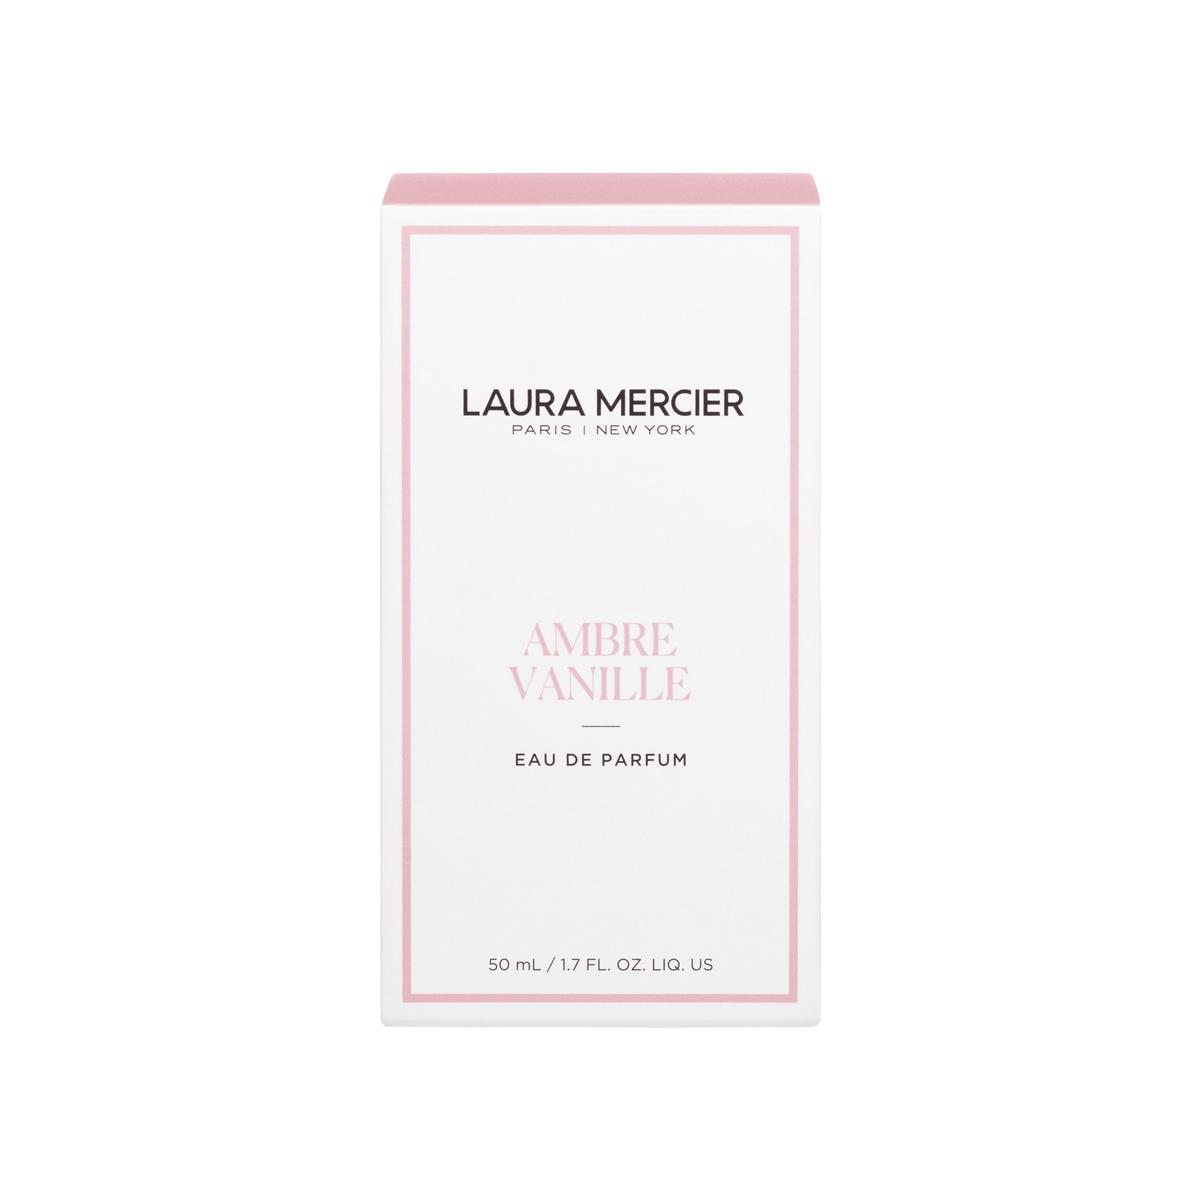 Laura Mercier - Ambre Vanille Eau de Parfum